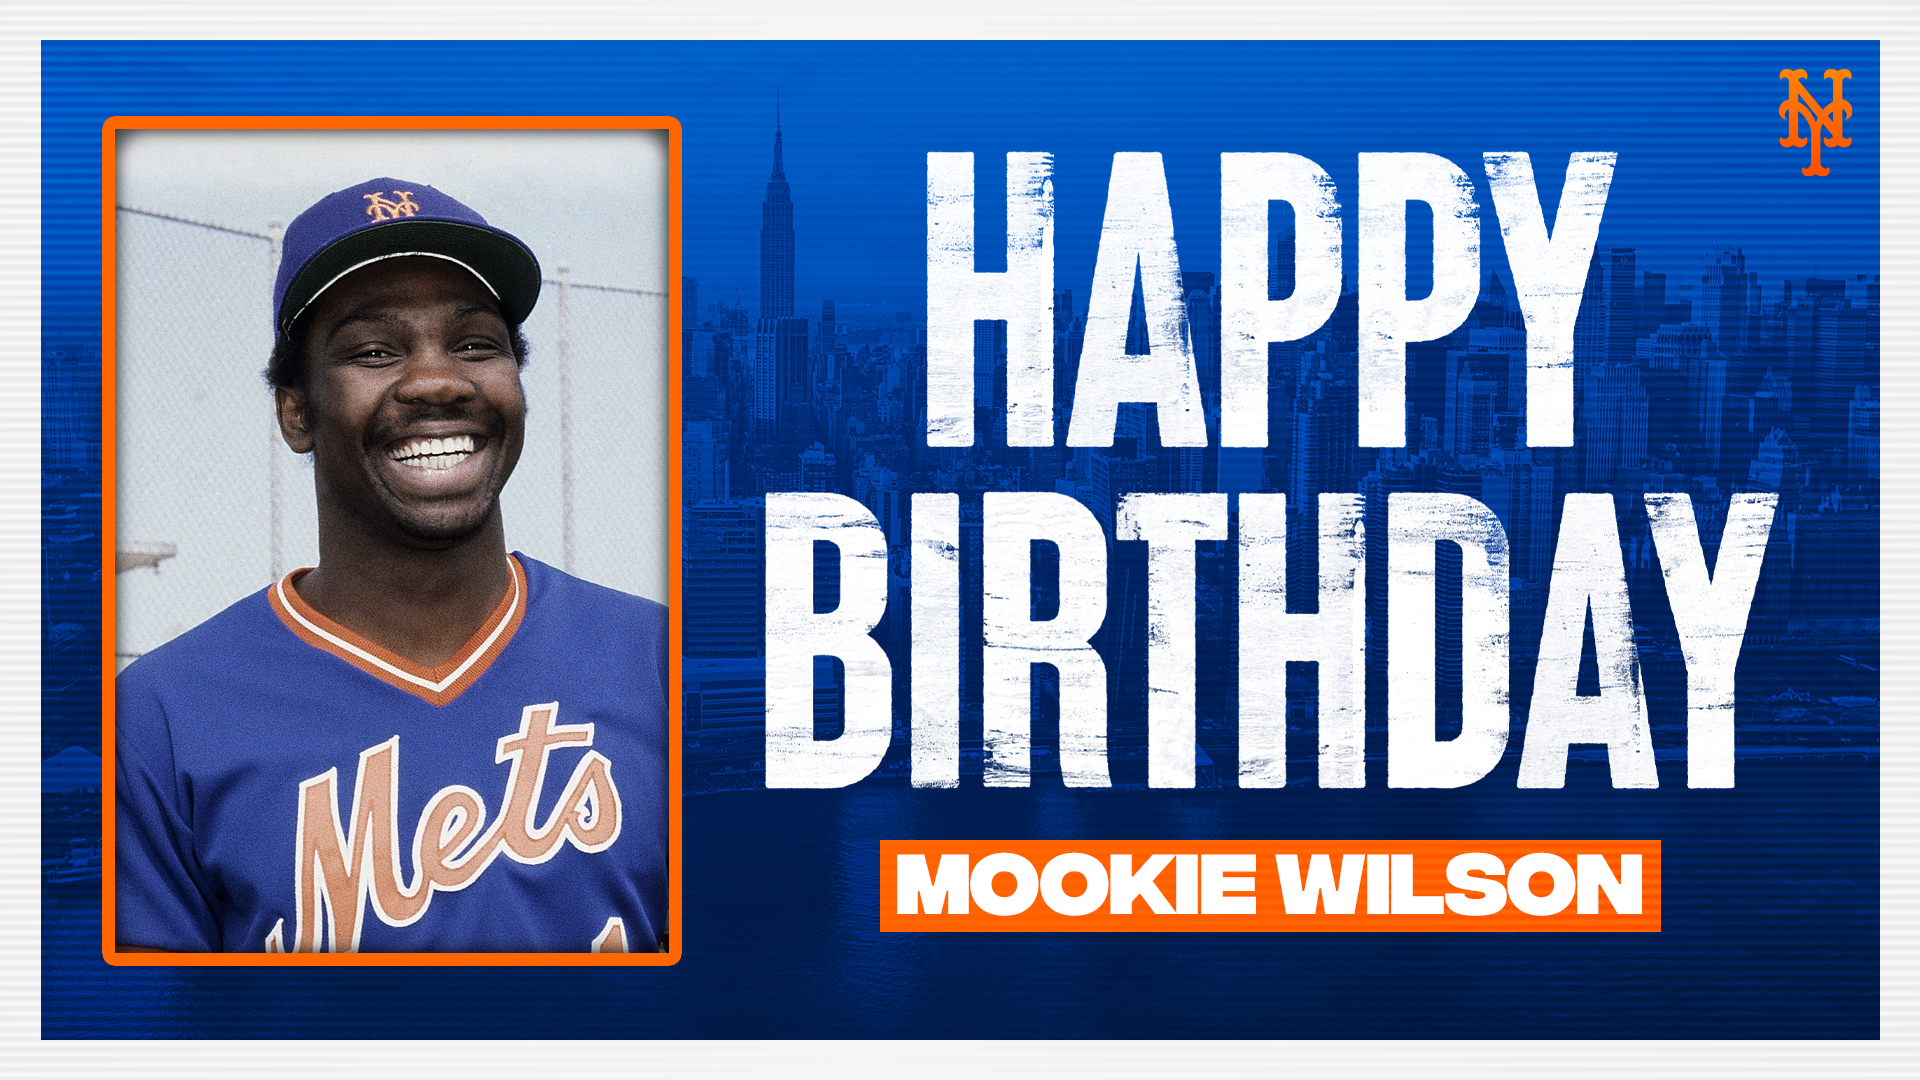 New York Mets on X: Happy birthday to World Series Champion